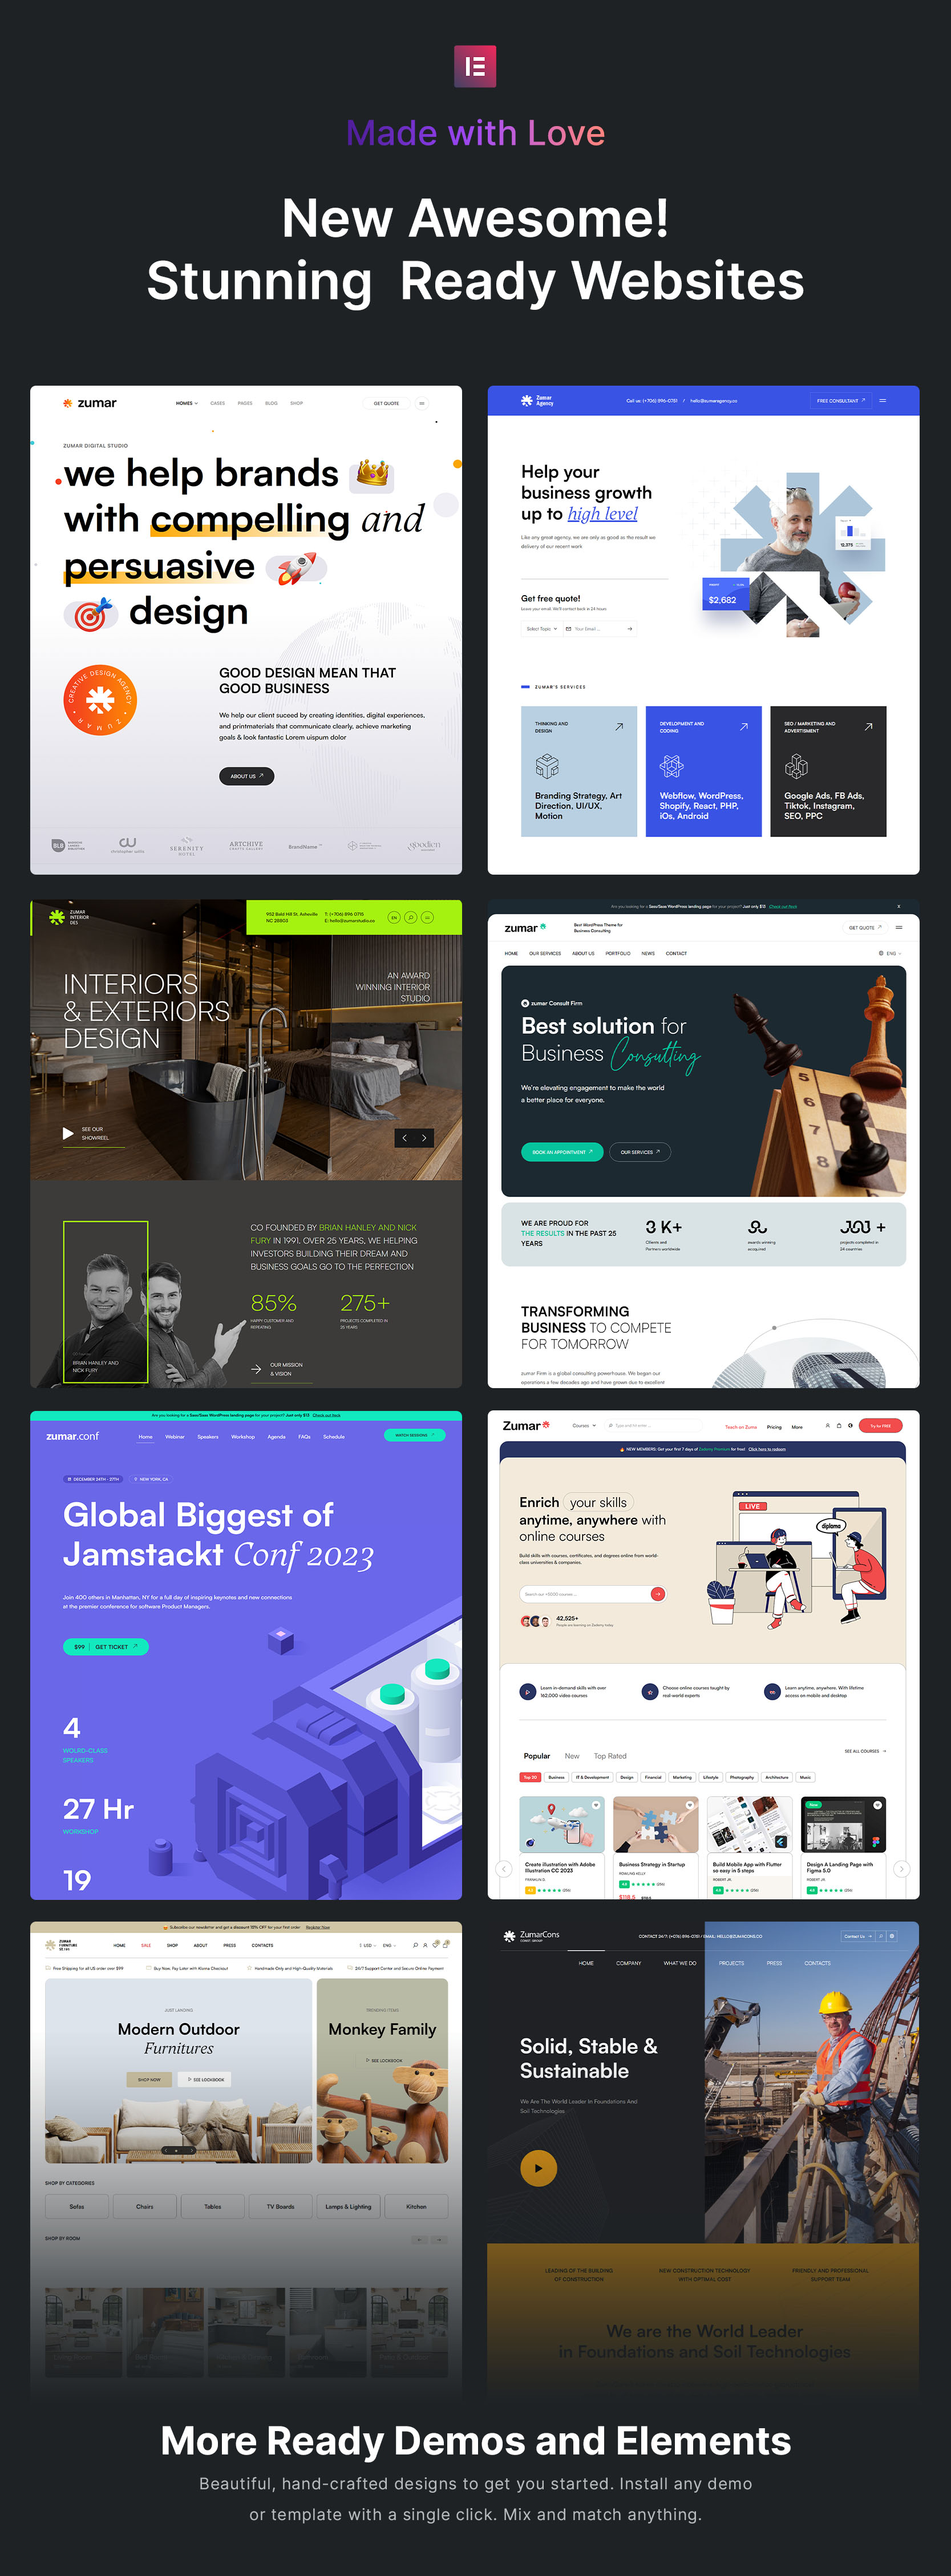 Zumar – Creative & Multipurpose WordPress Theme